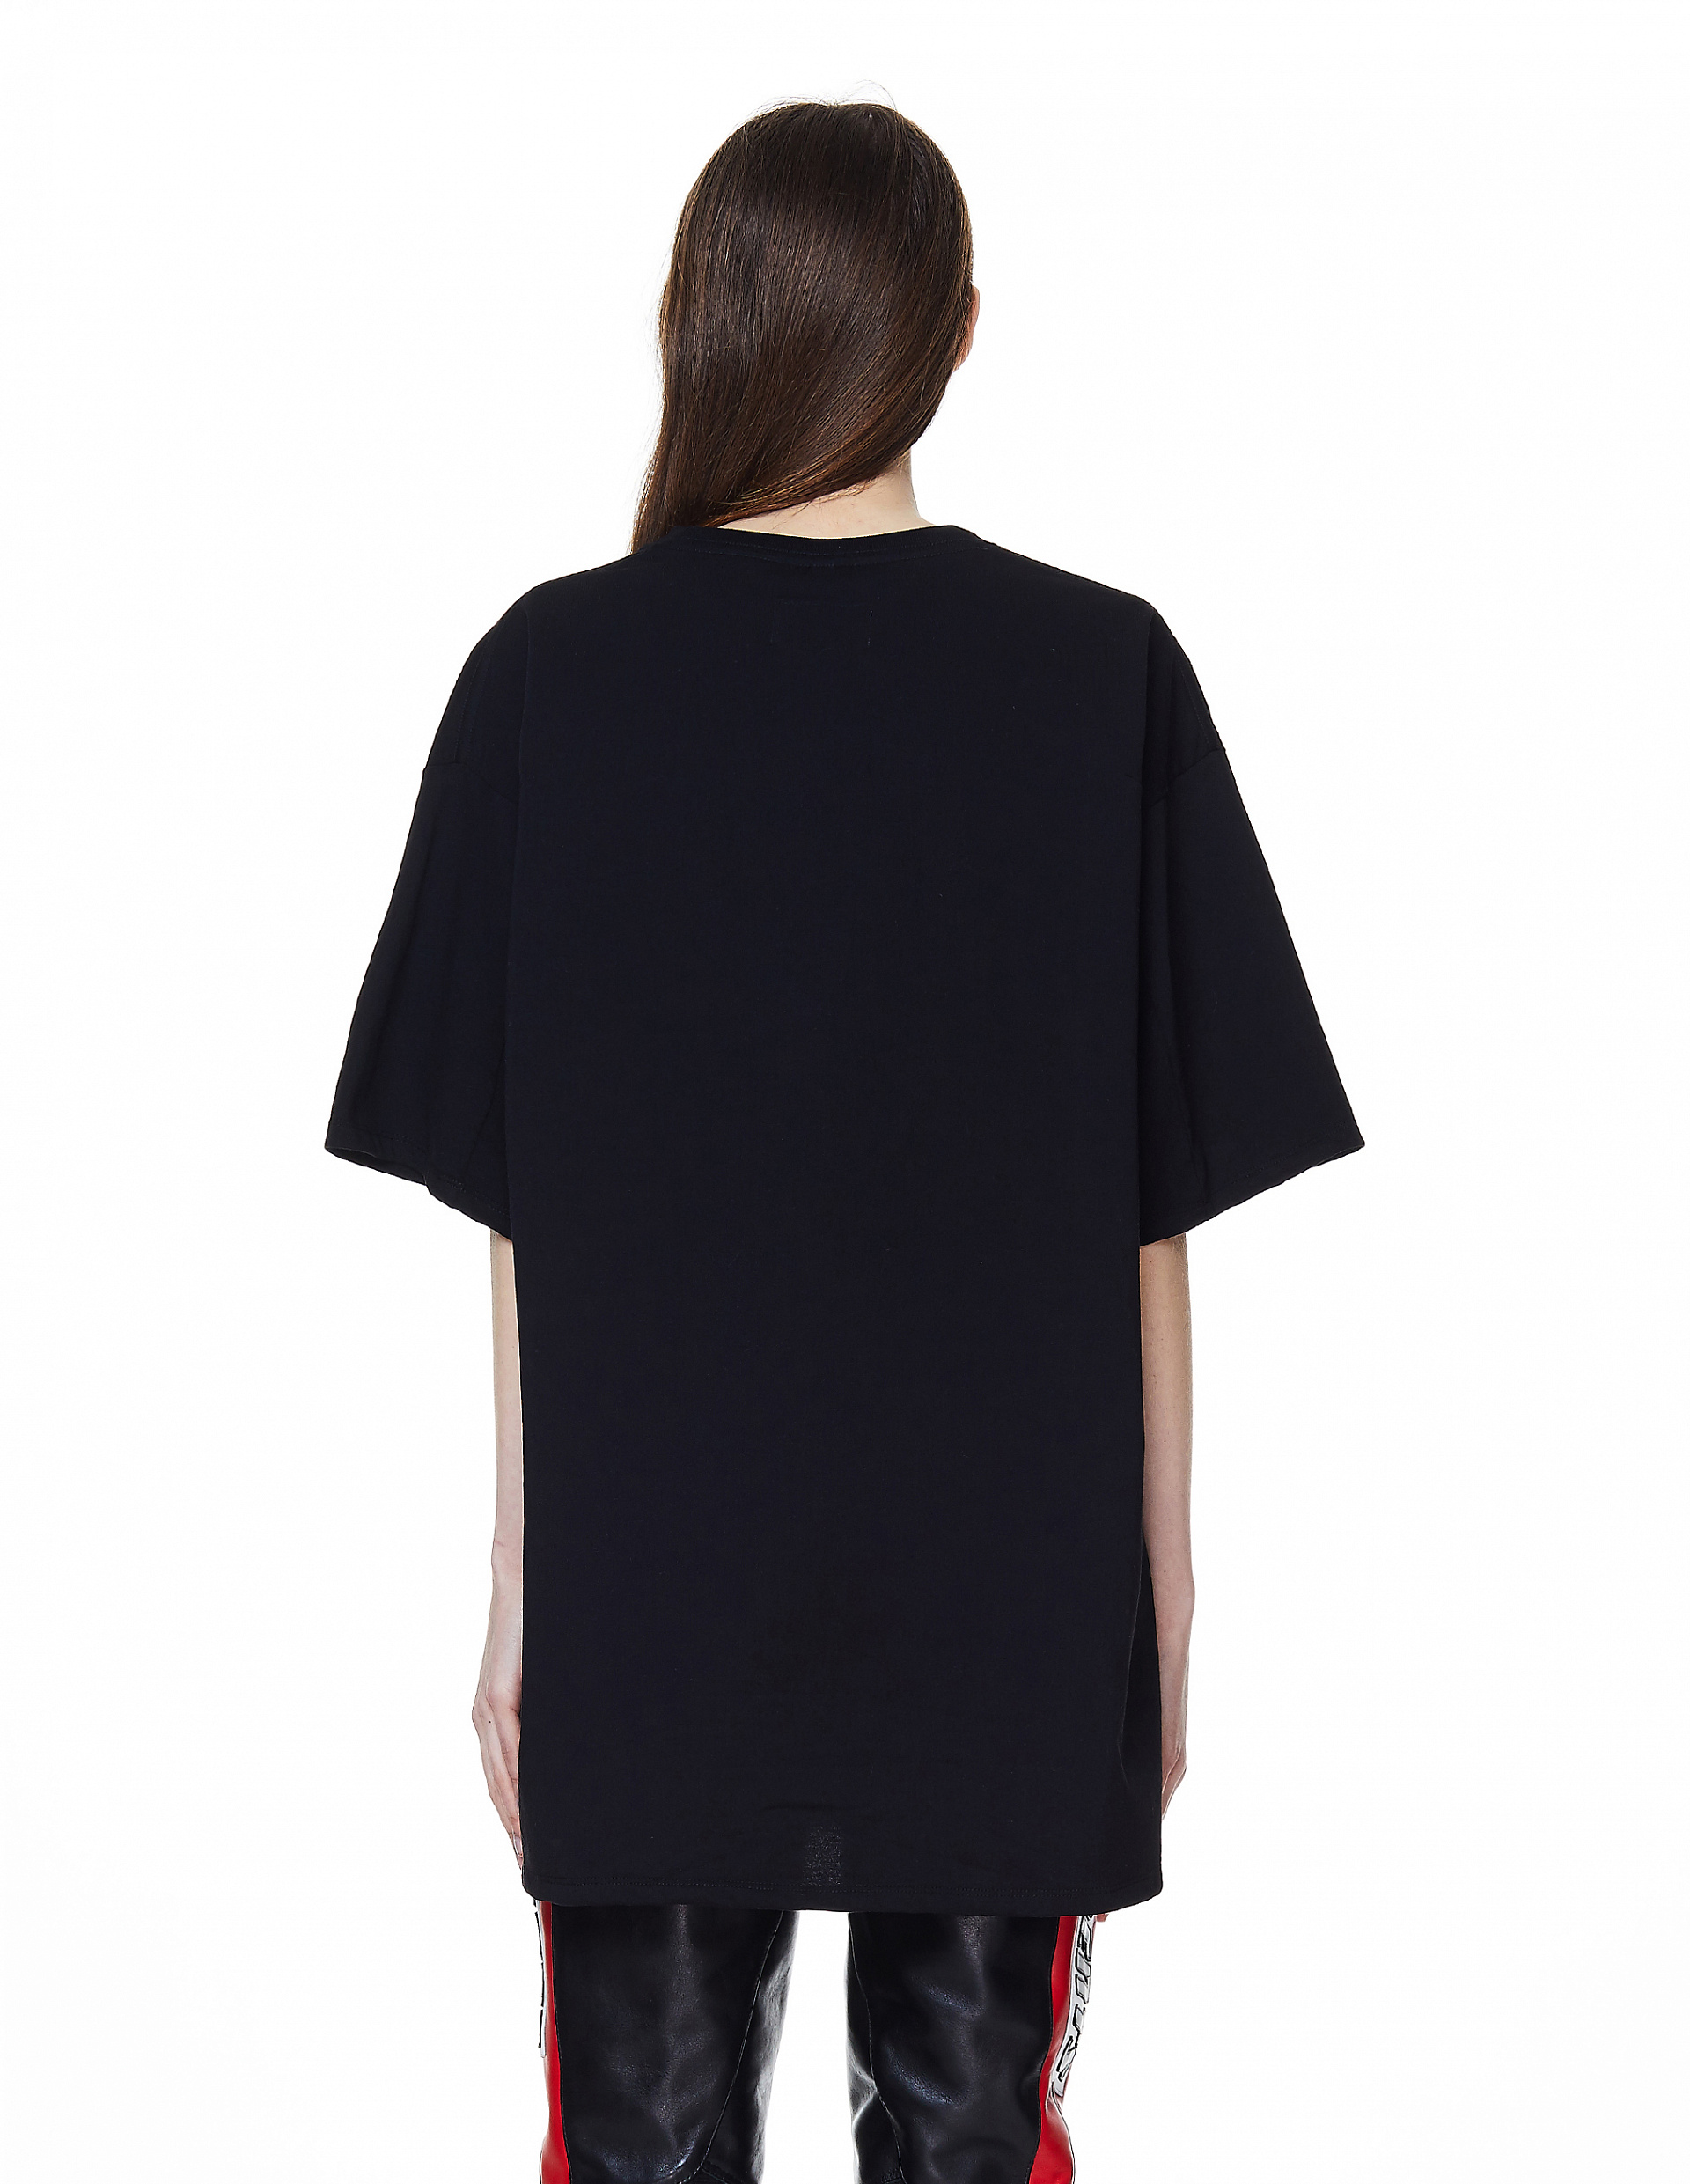 Buy Doublet women black cotton hidden message t-shirt for $245 online